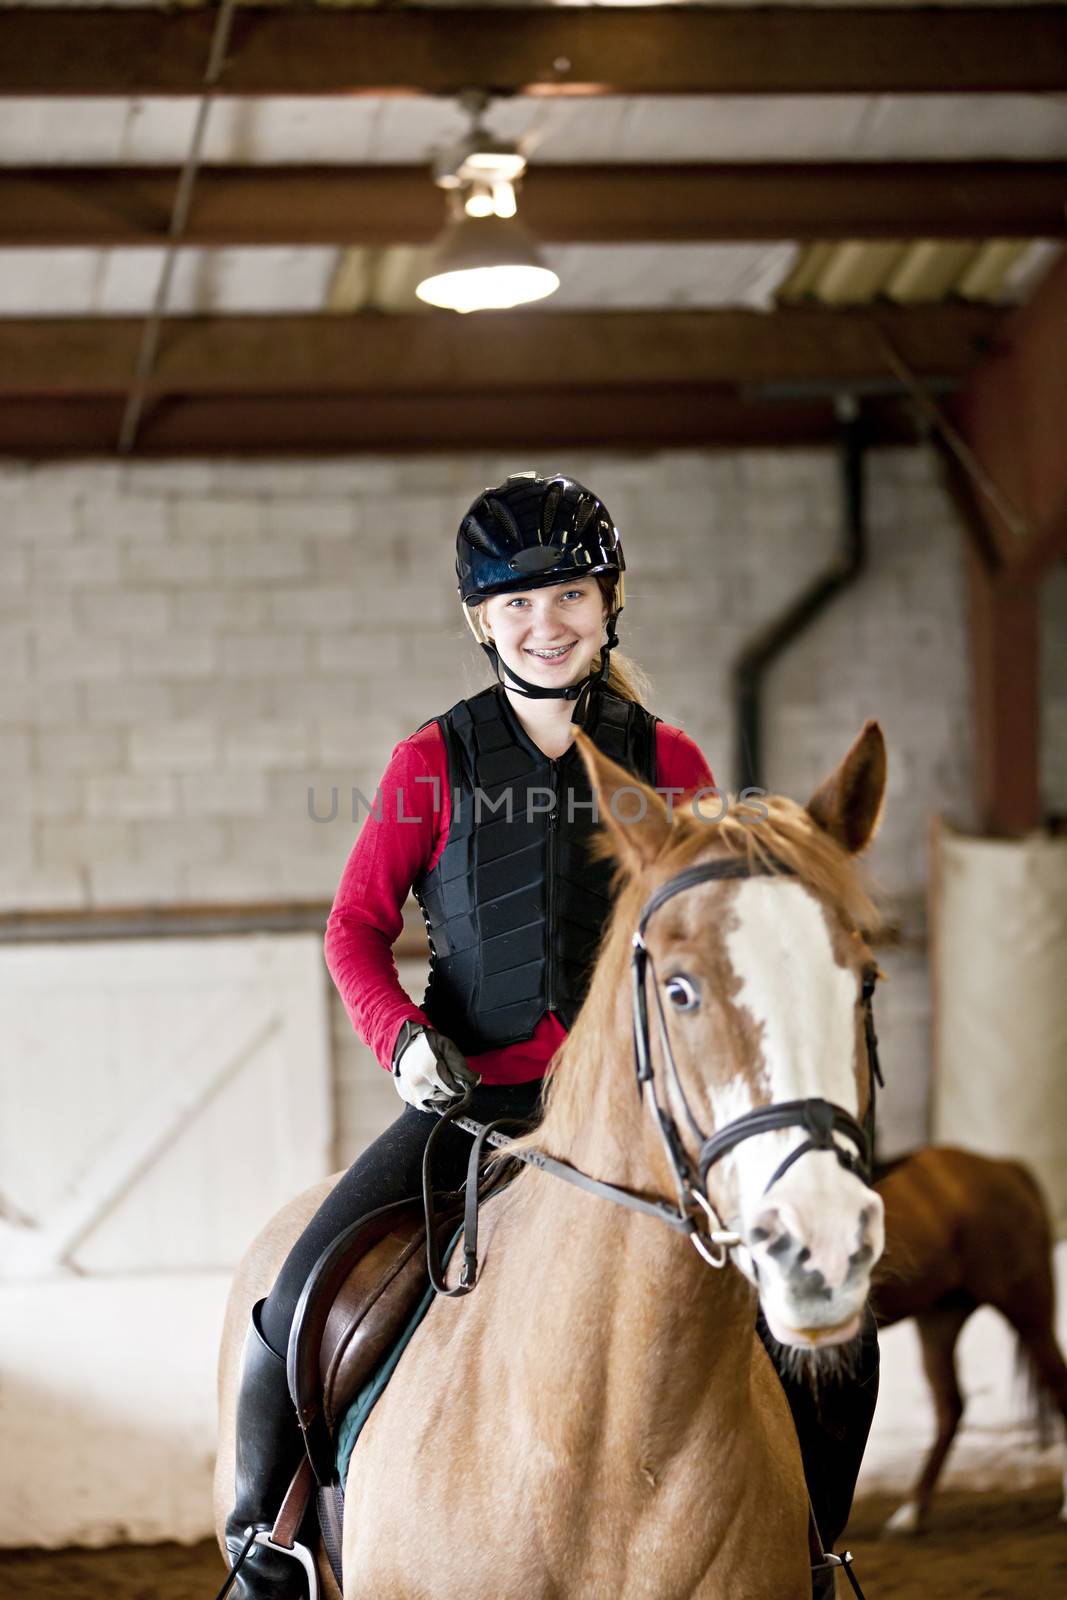 Teenage girl on horseback wearing helmet and safety vest in indoor arena